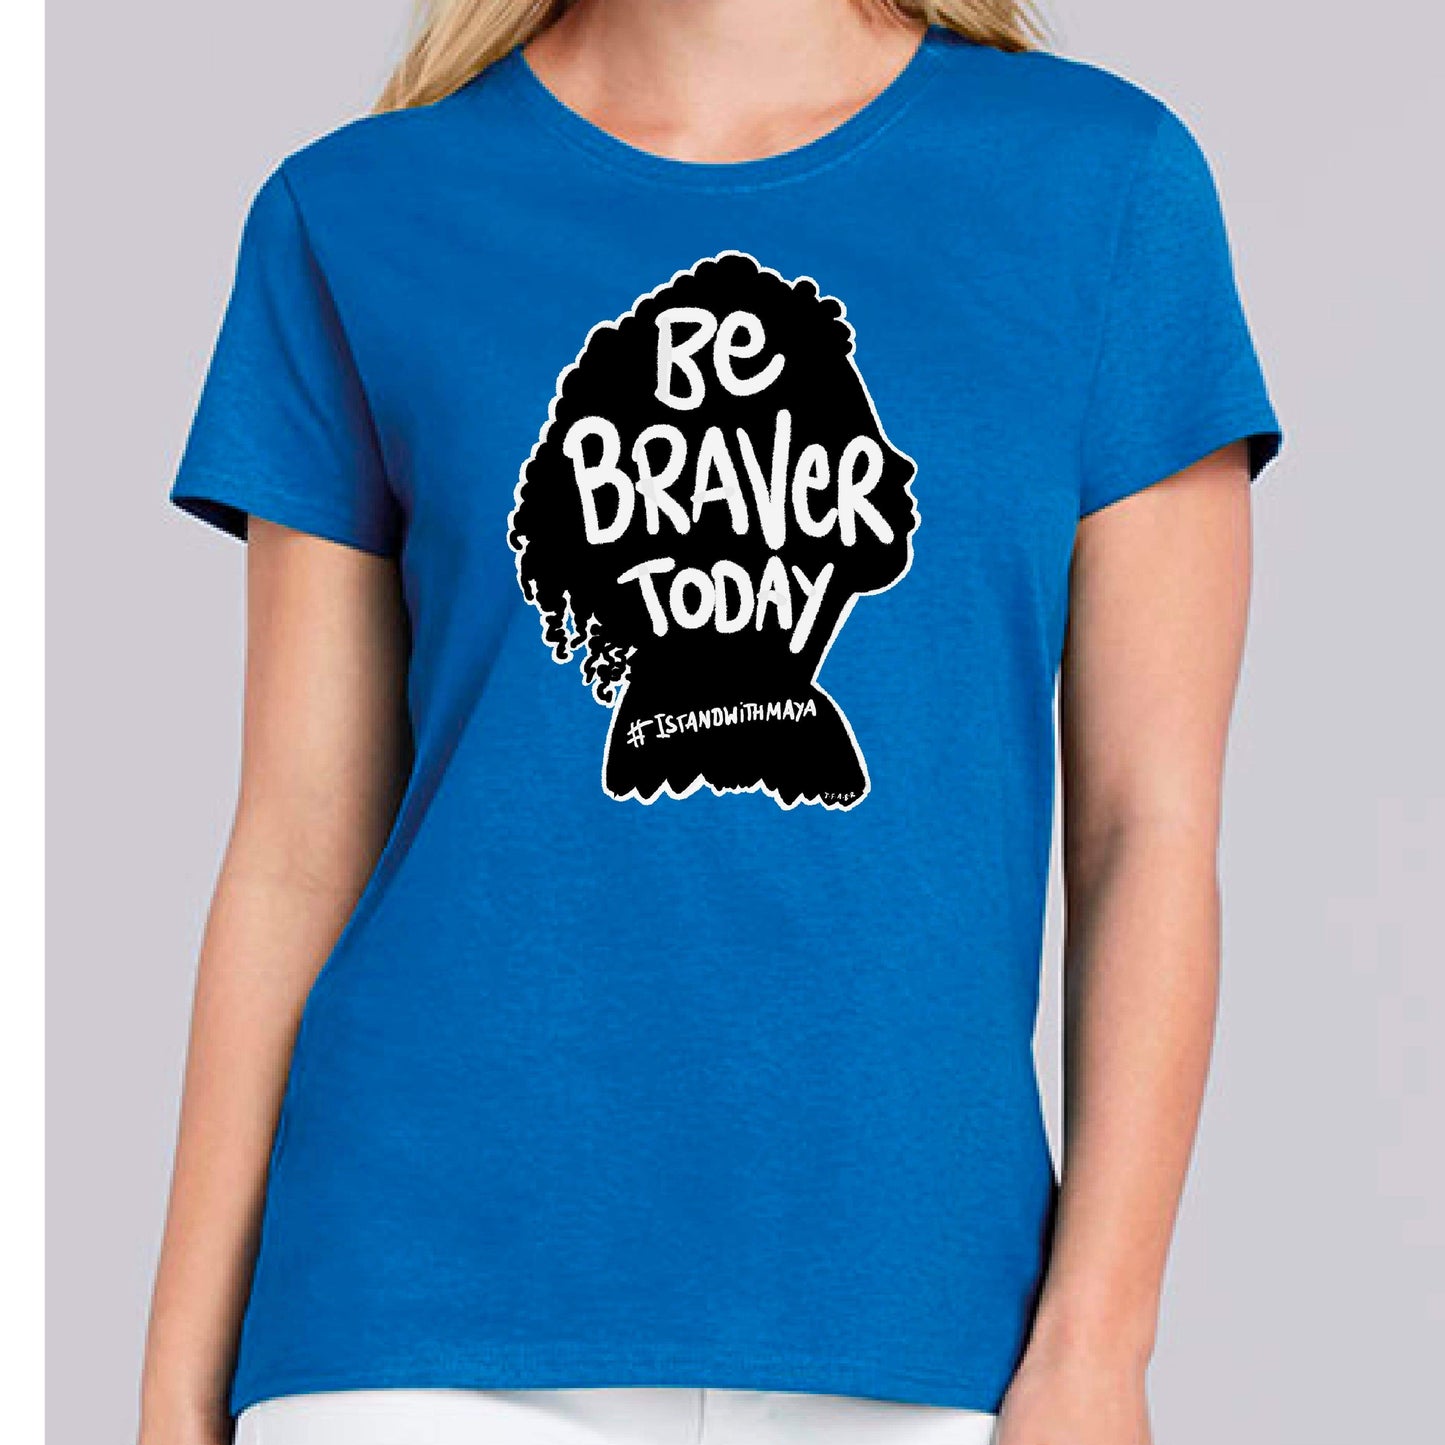 Be Braver Ladyfit T-Shirt